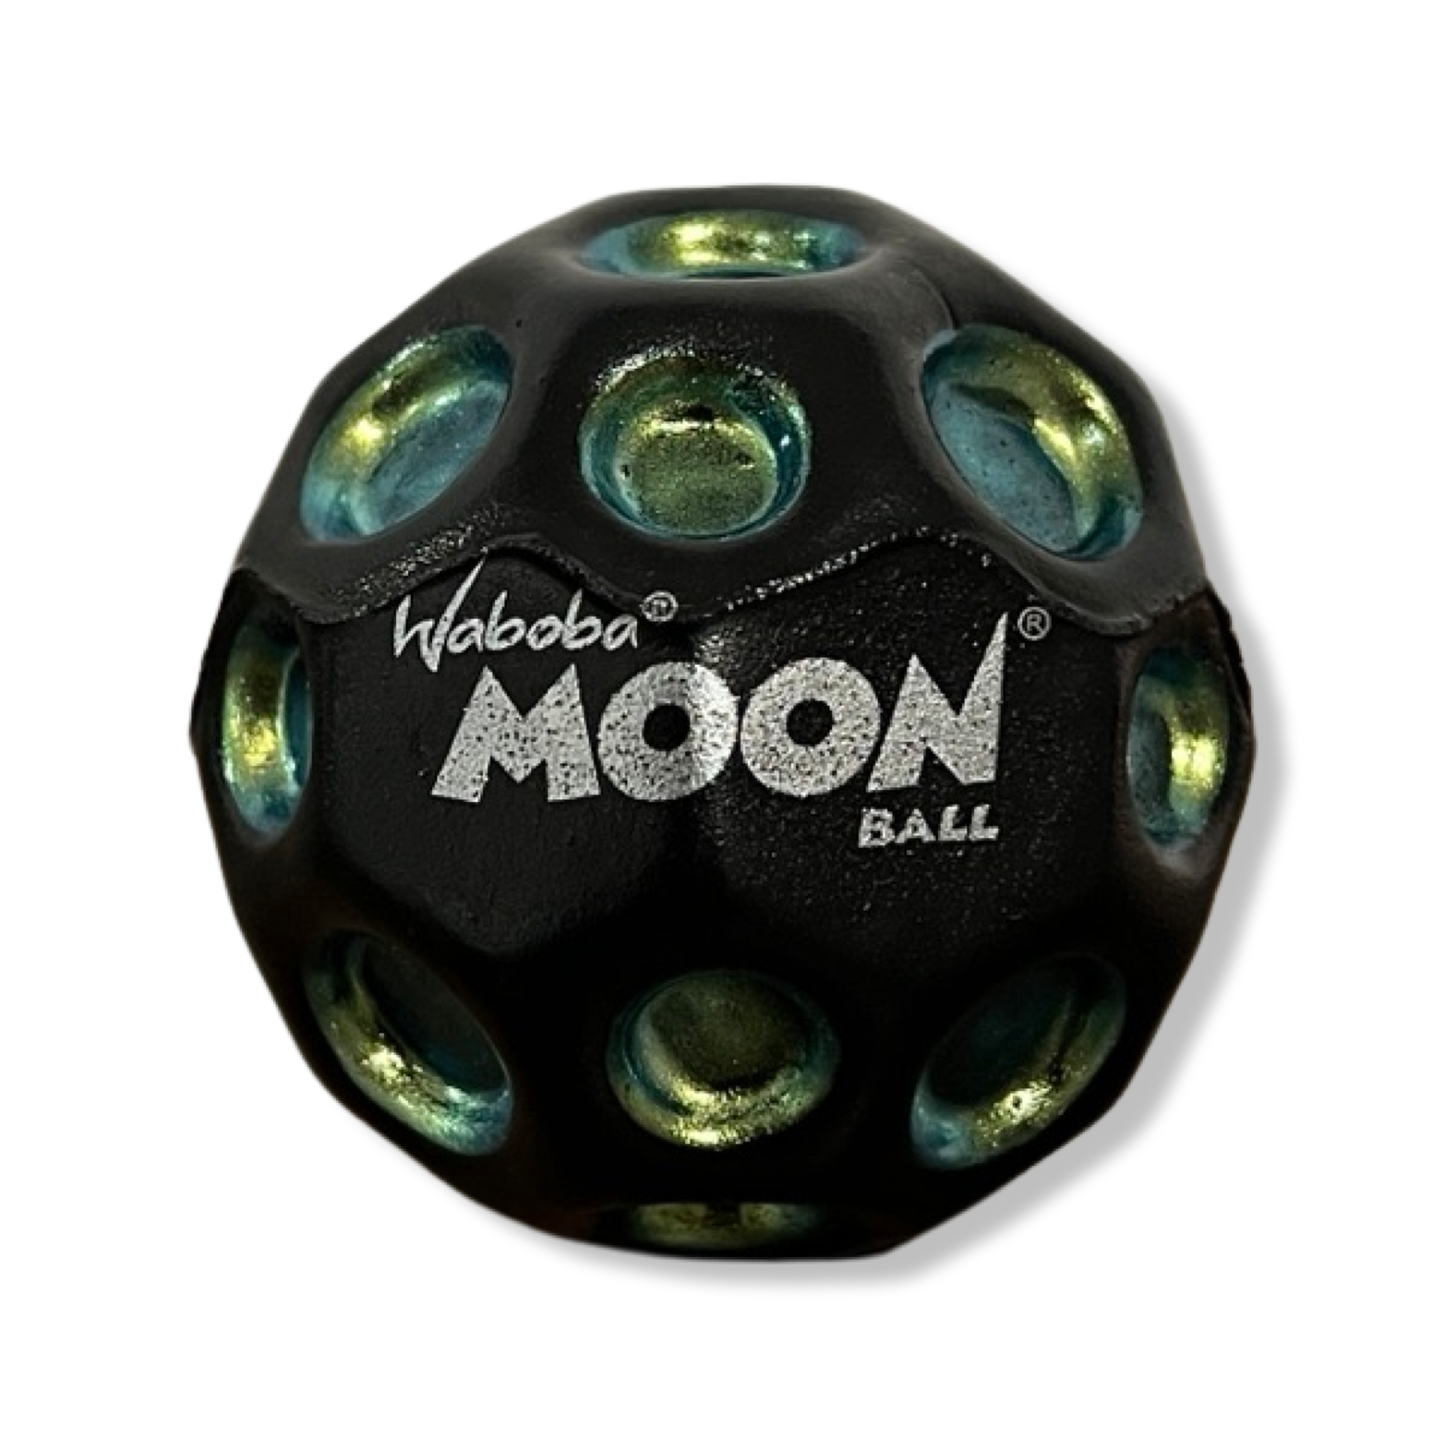 Moonball "Dark Side of the Moon" schwarz gold